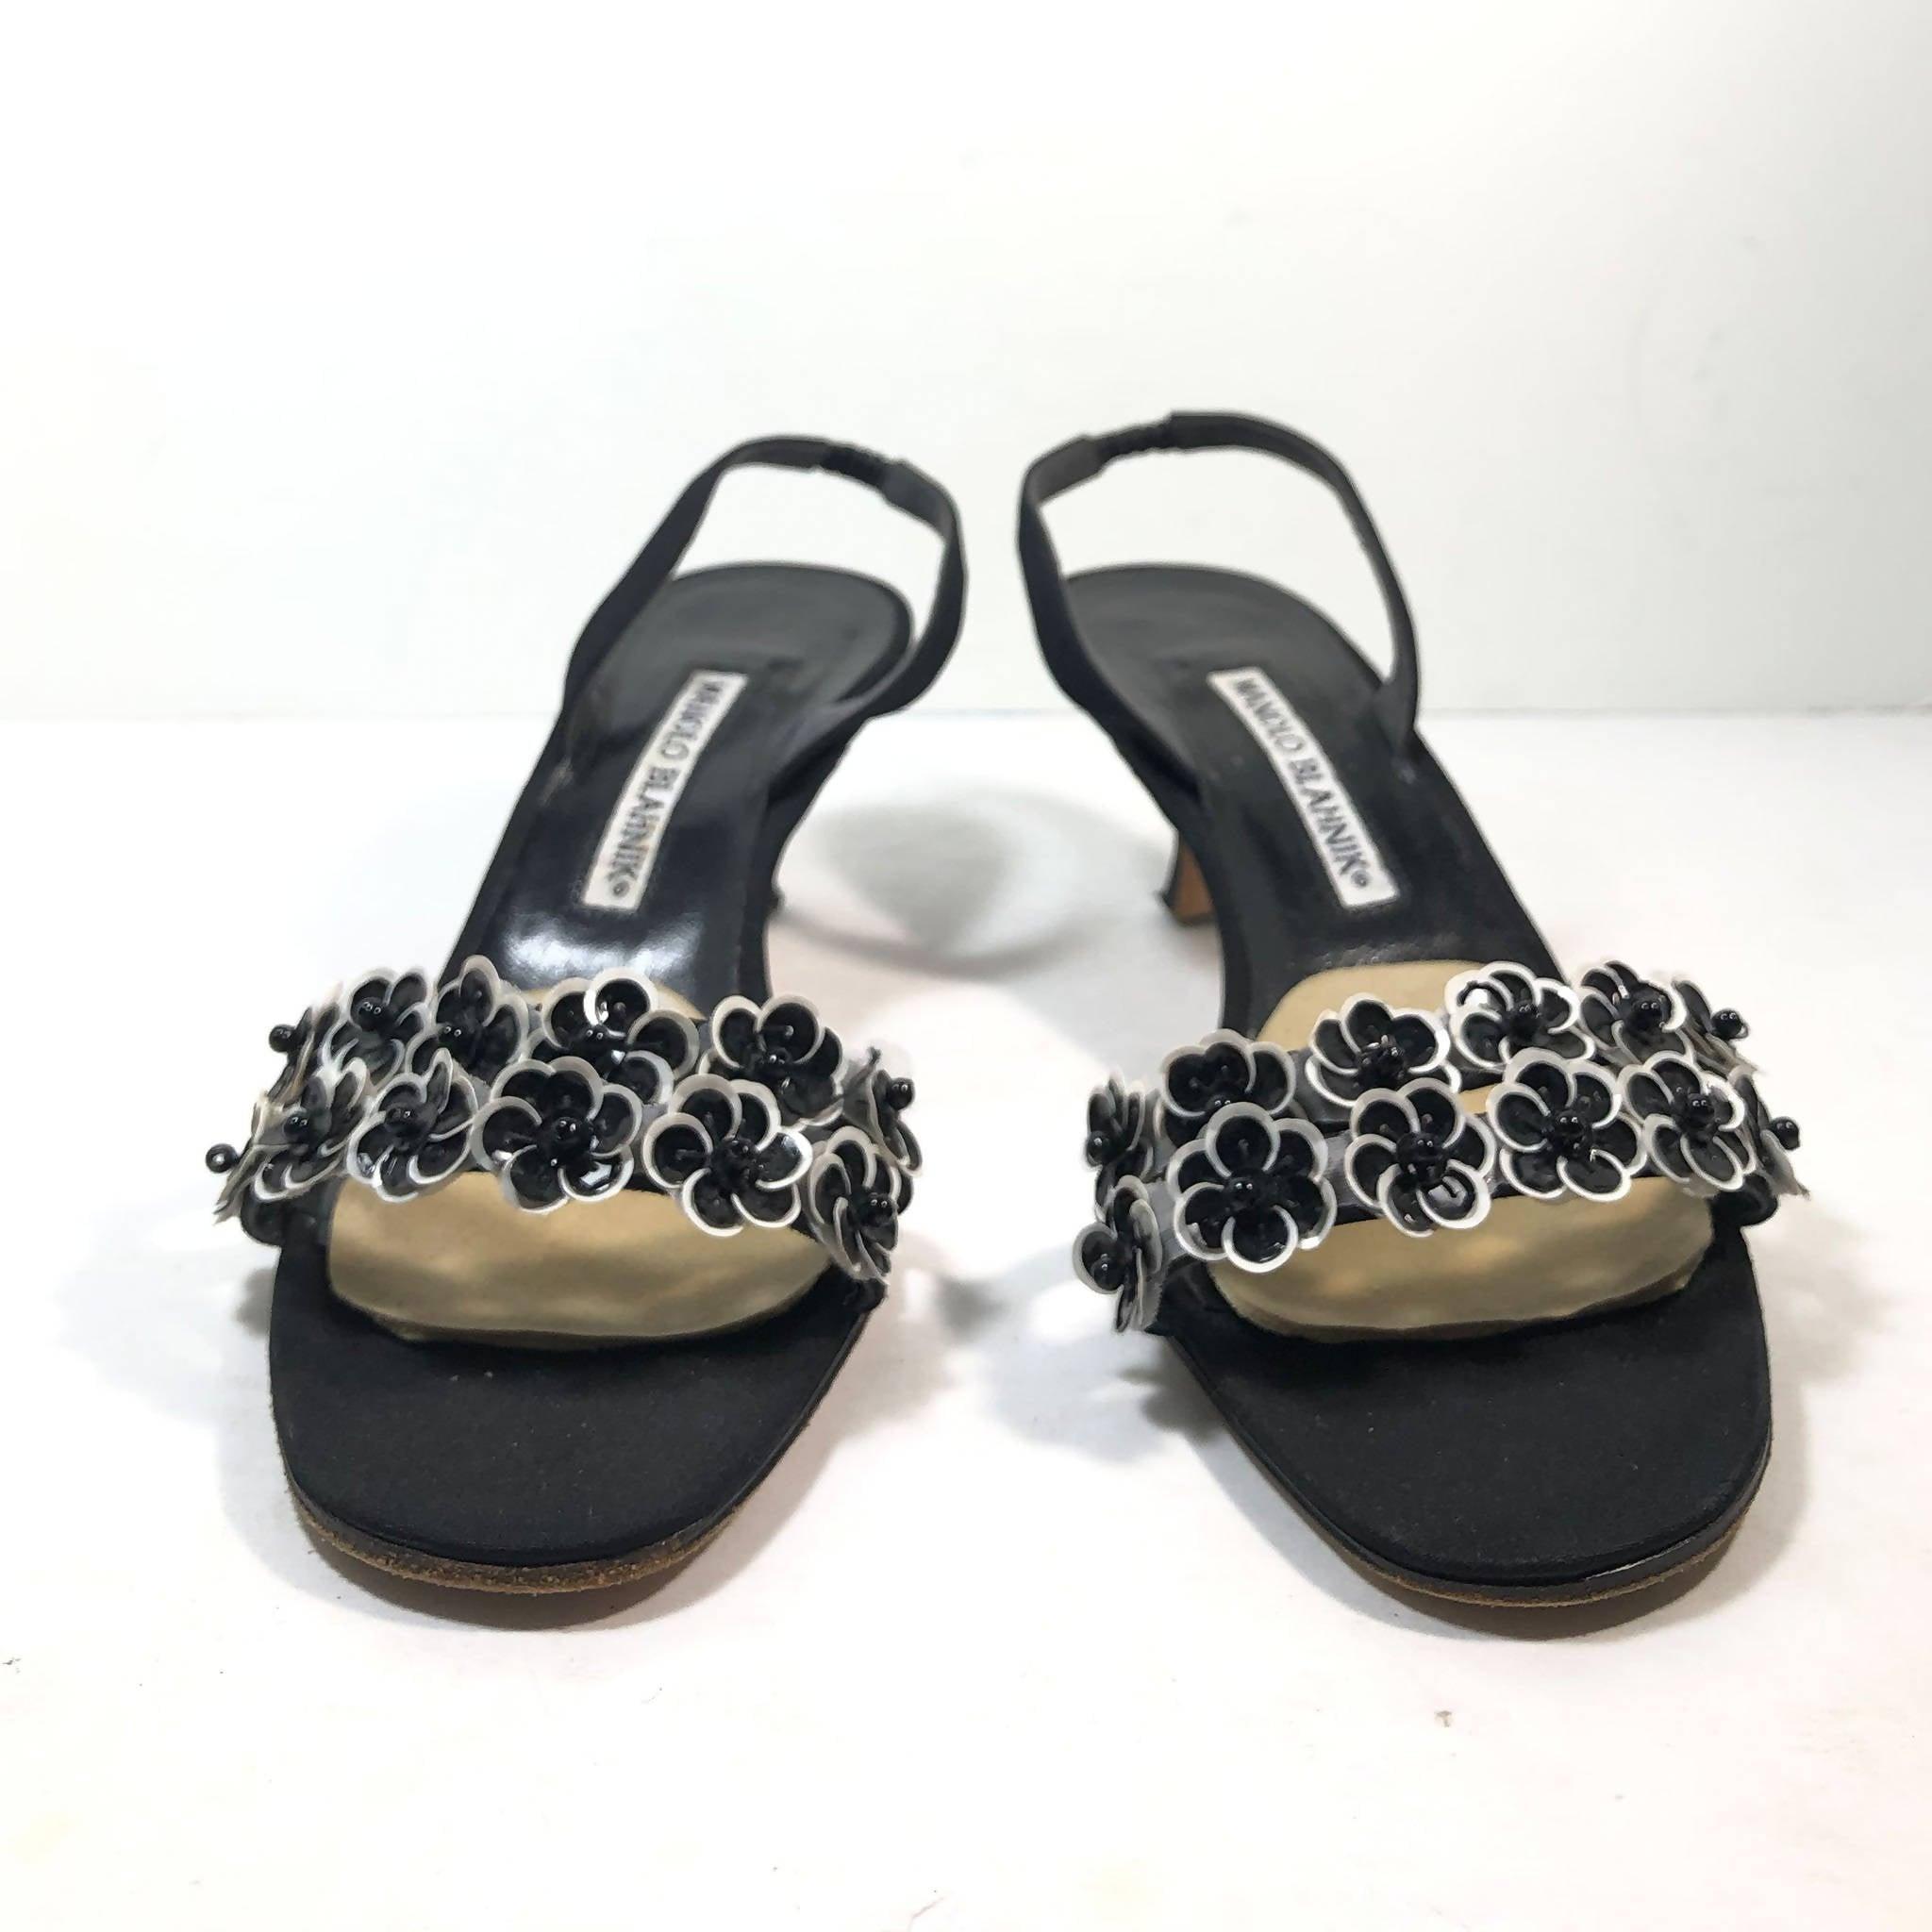 MANOLO BLAHNIK Black & White Slingback Heels with Floral Toe Strap